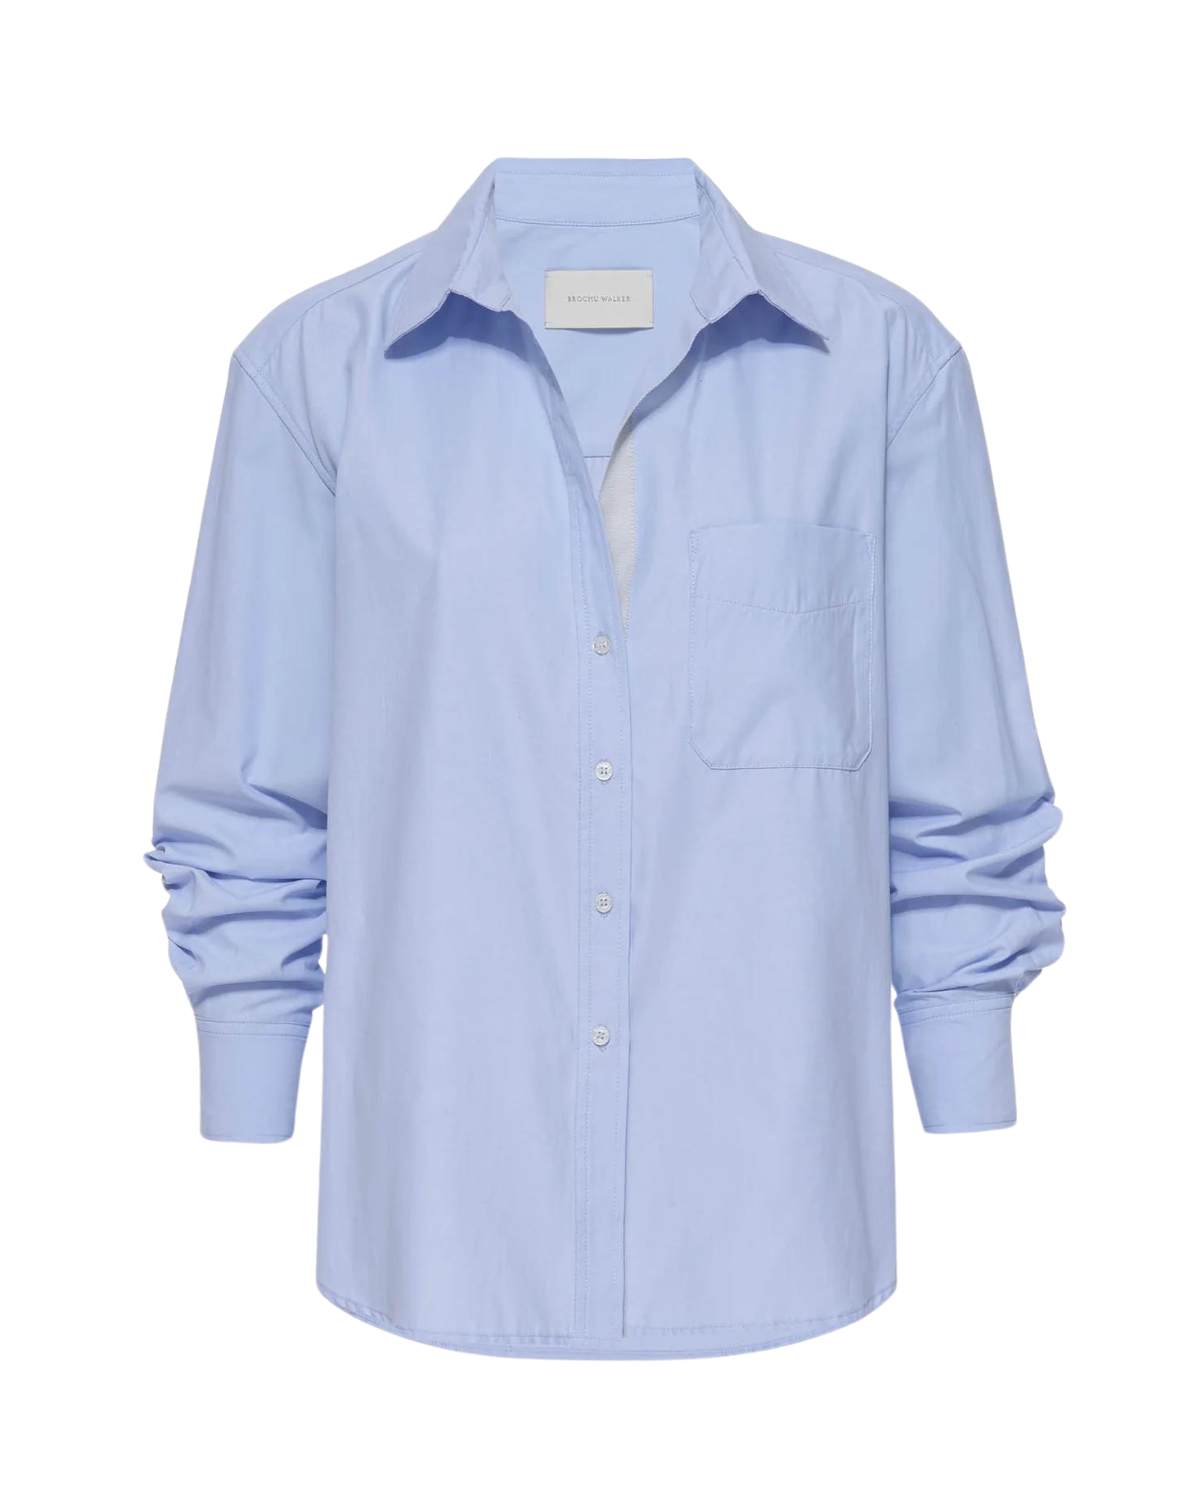 Everyday Shirt (Oxford Blue)